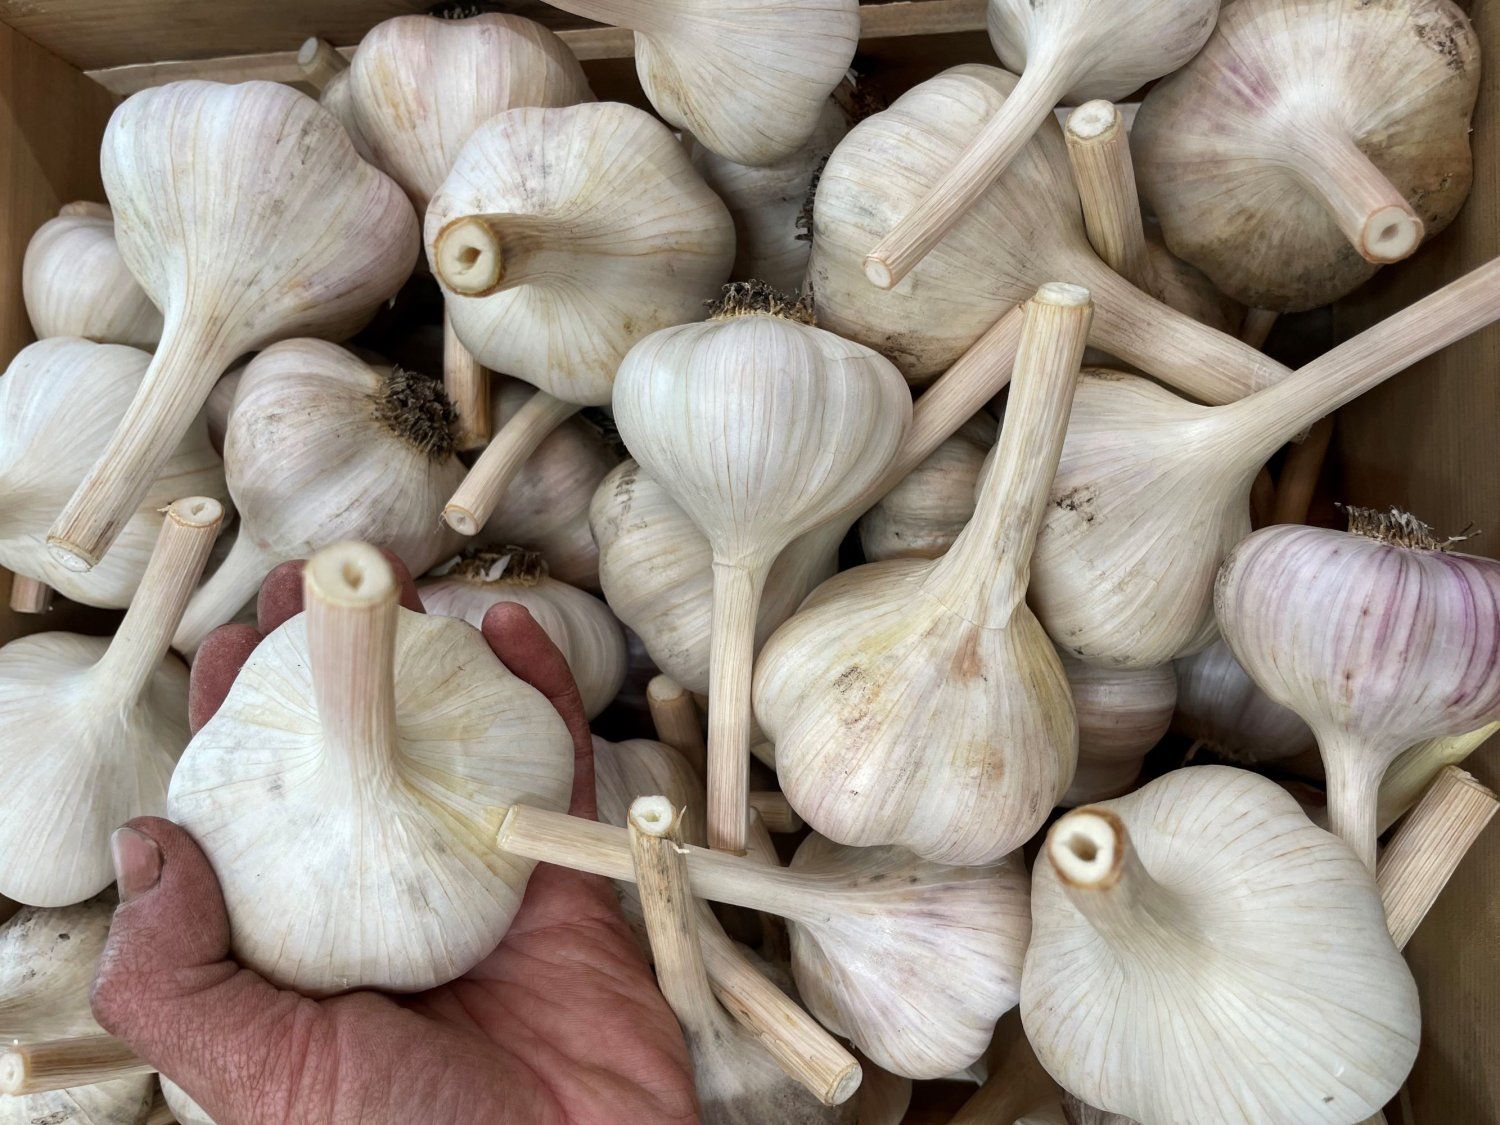 Next Happening: Curing Garlic